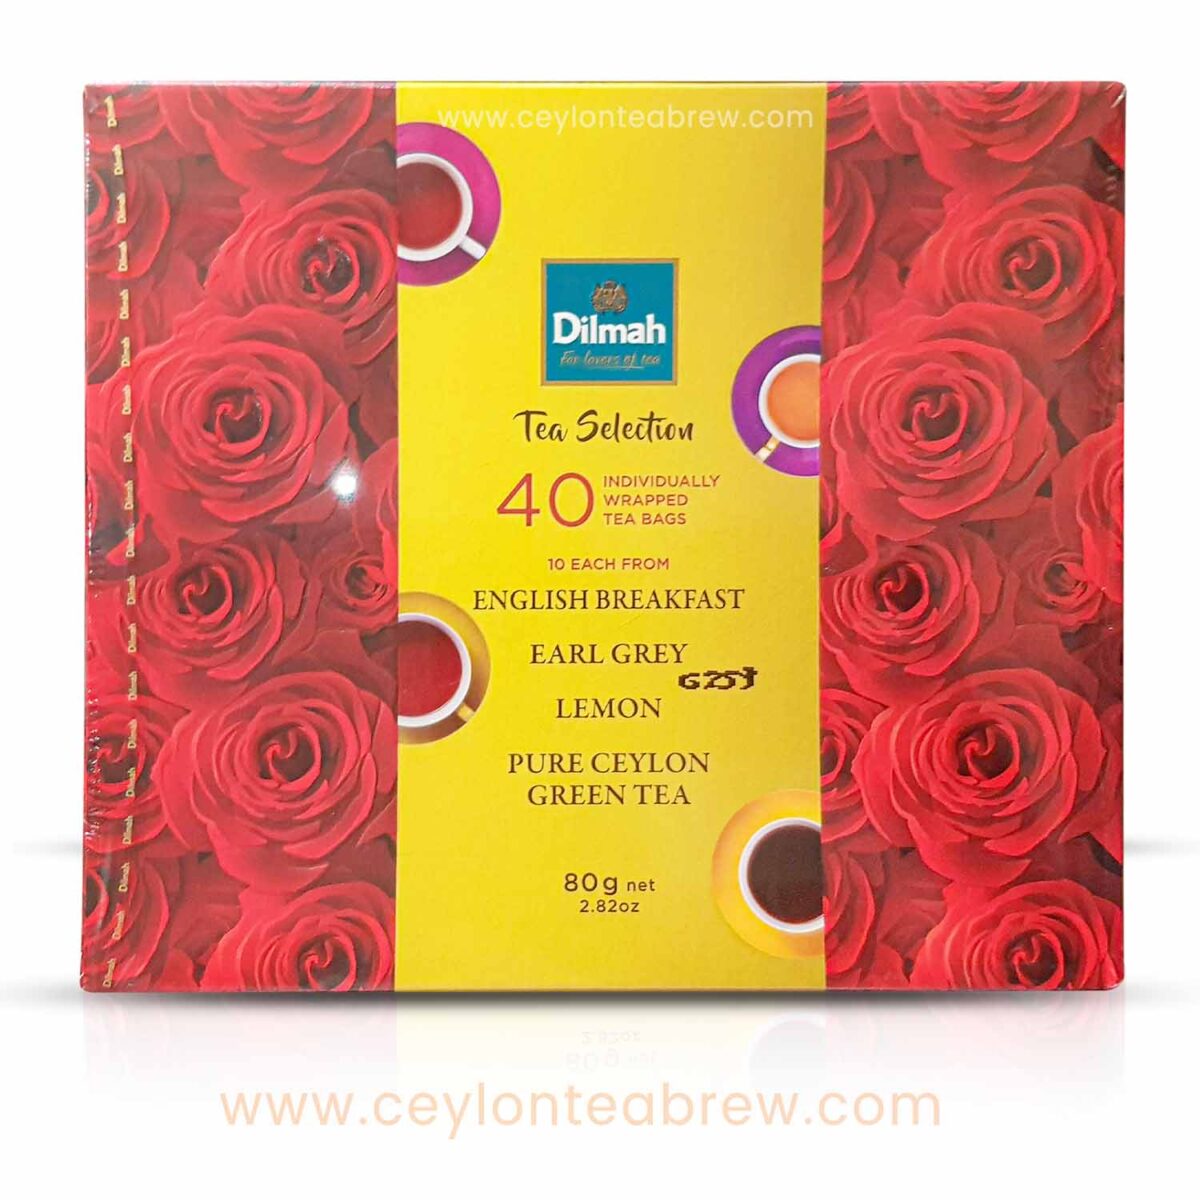 Dilmah 40 tea selection gift pack 1